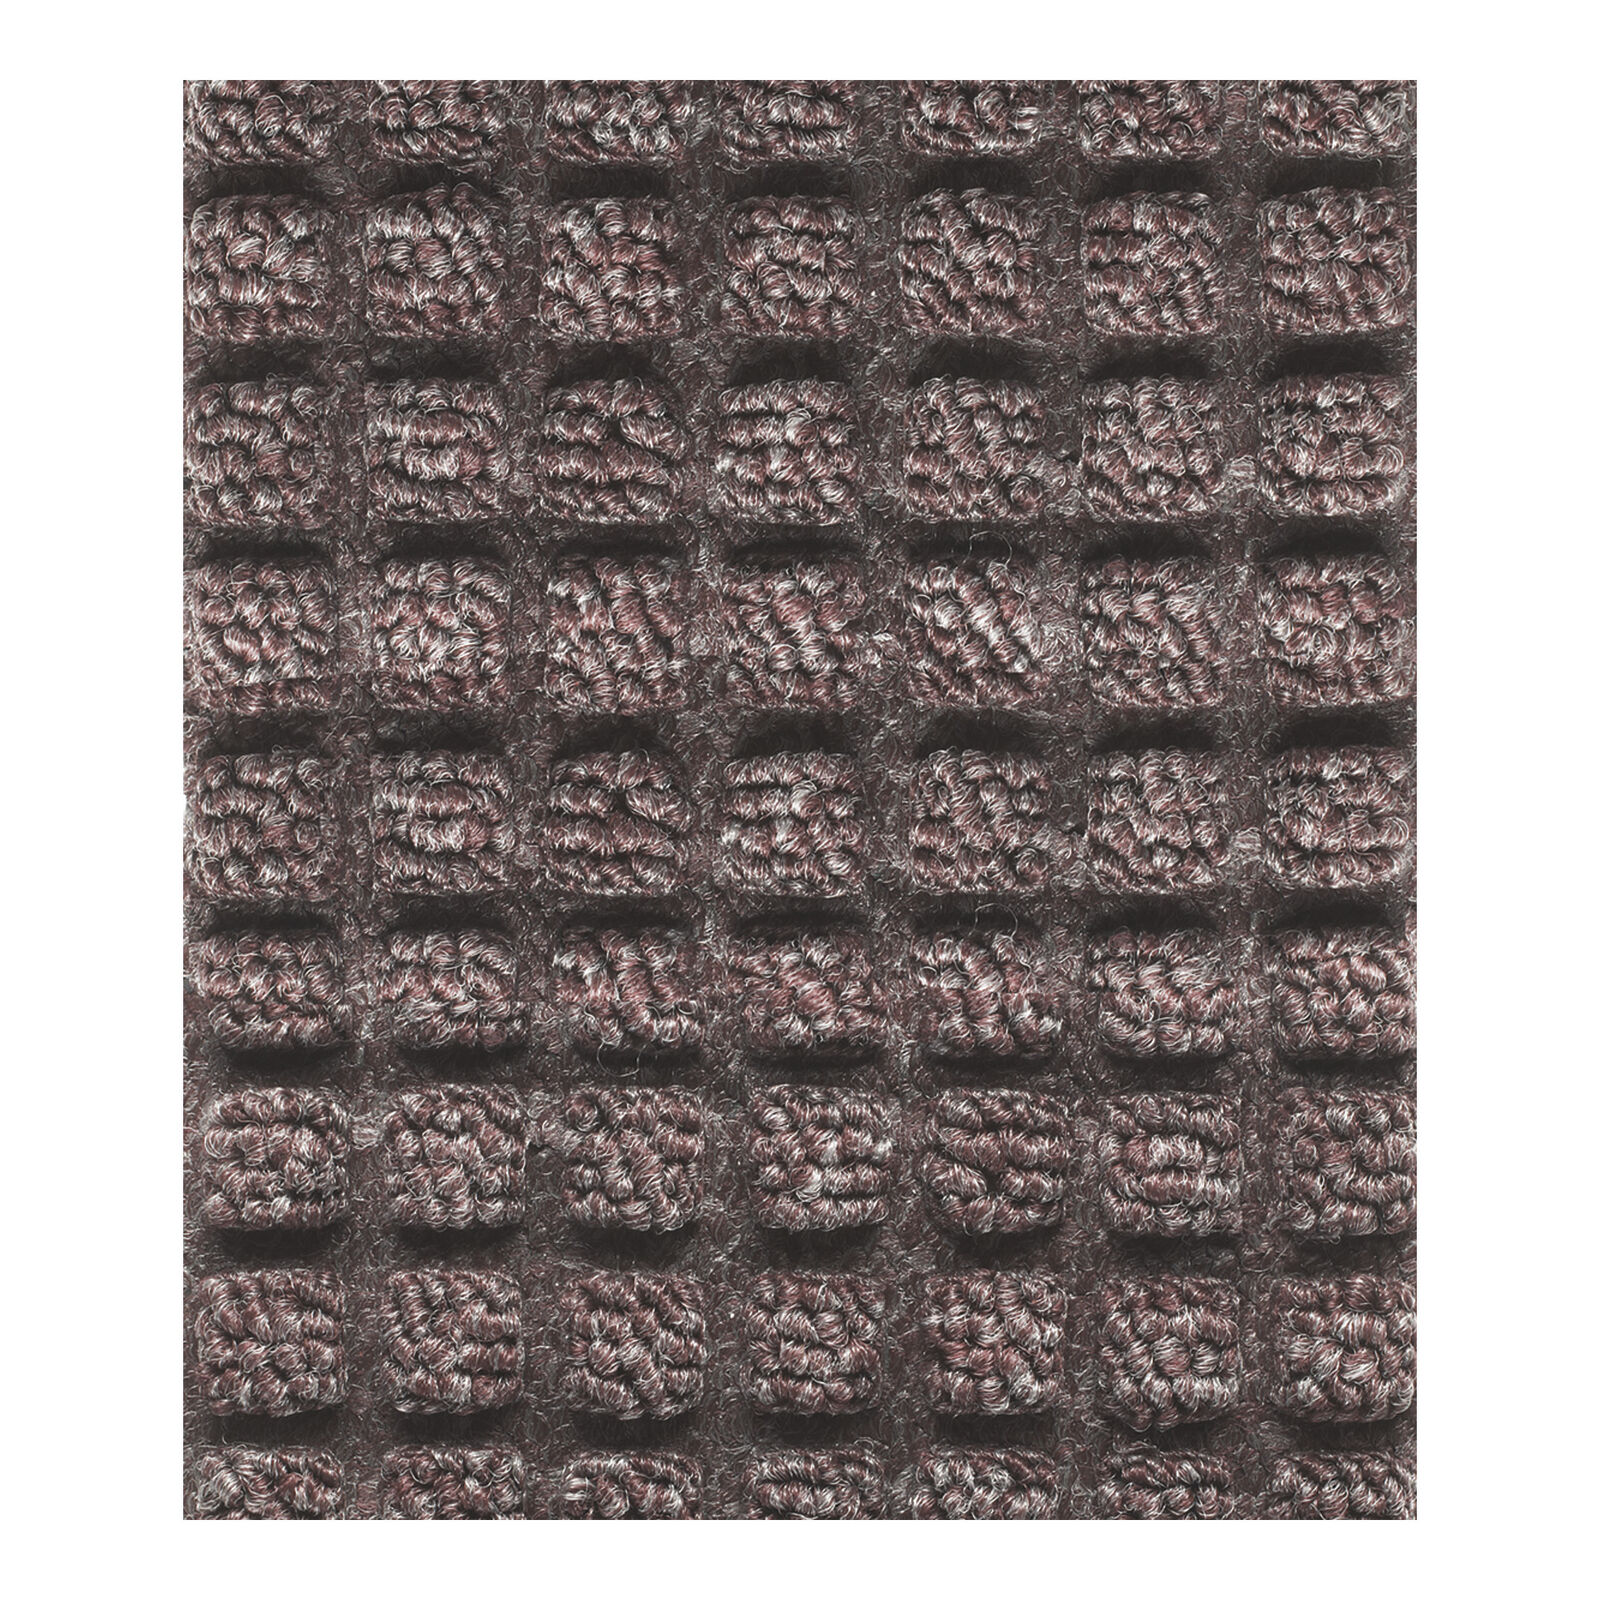 Notrax Guzzler Floor Matting - 3ft. X 5ft Burgundy, Model# 166s0035bd